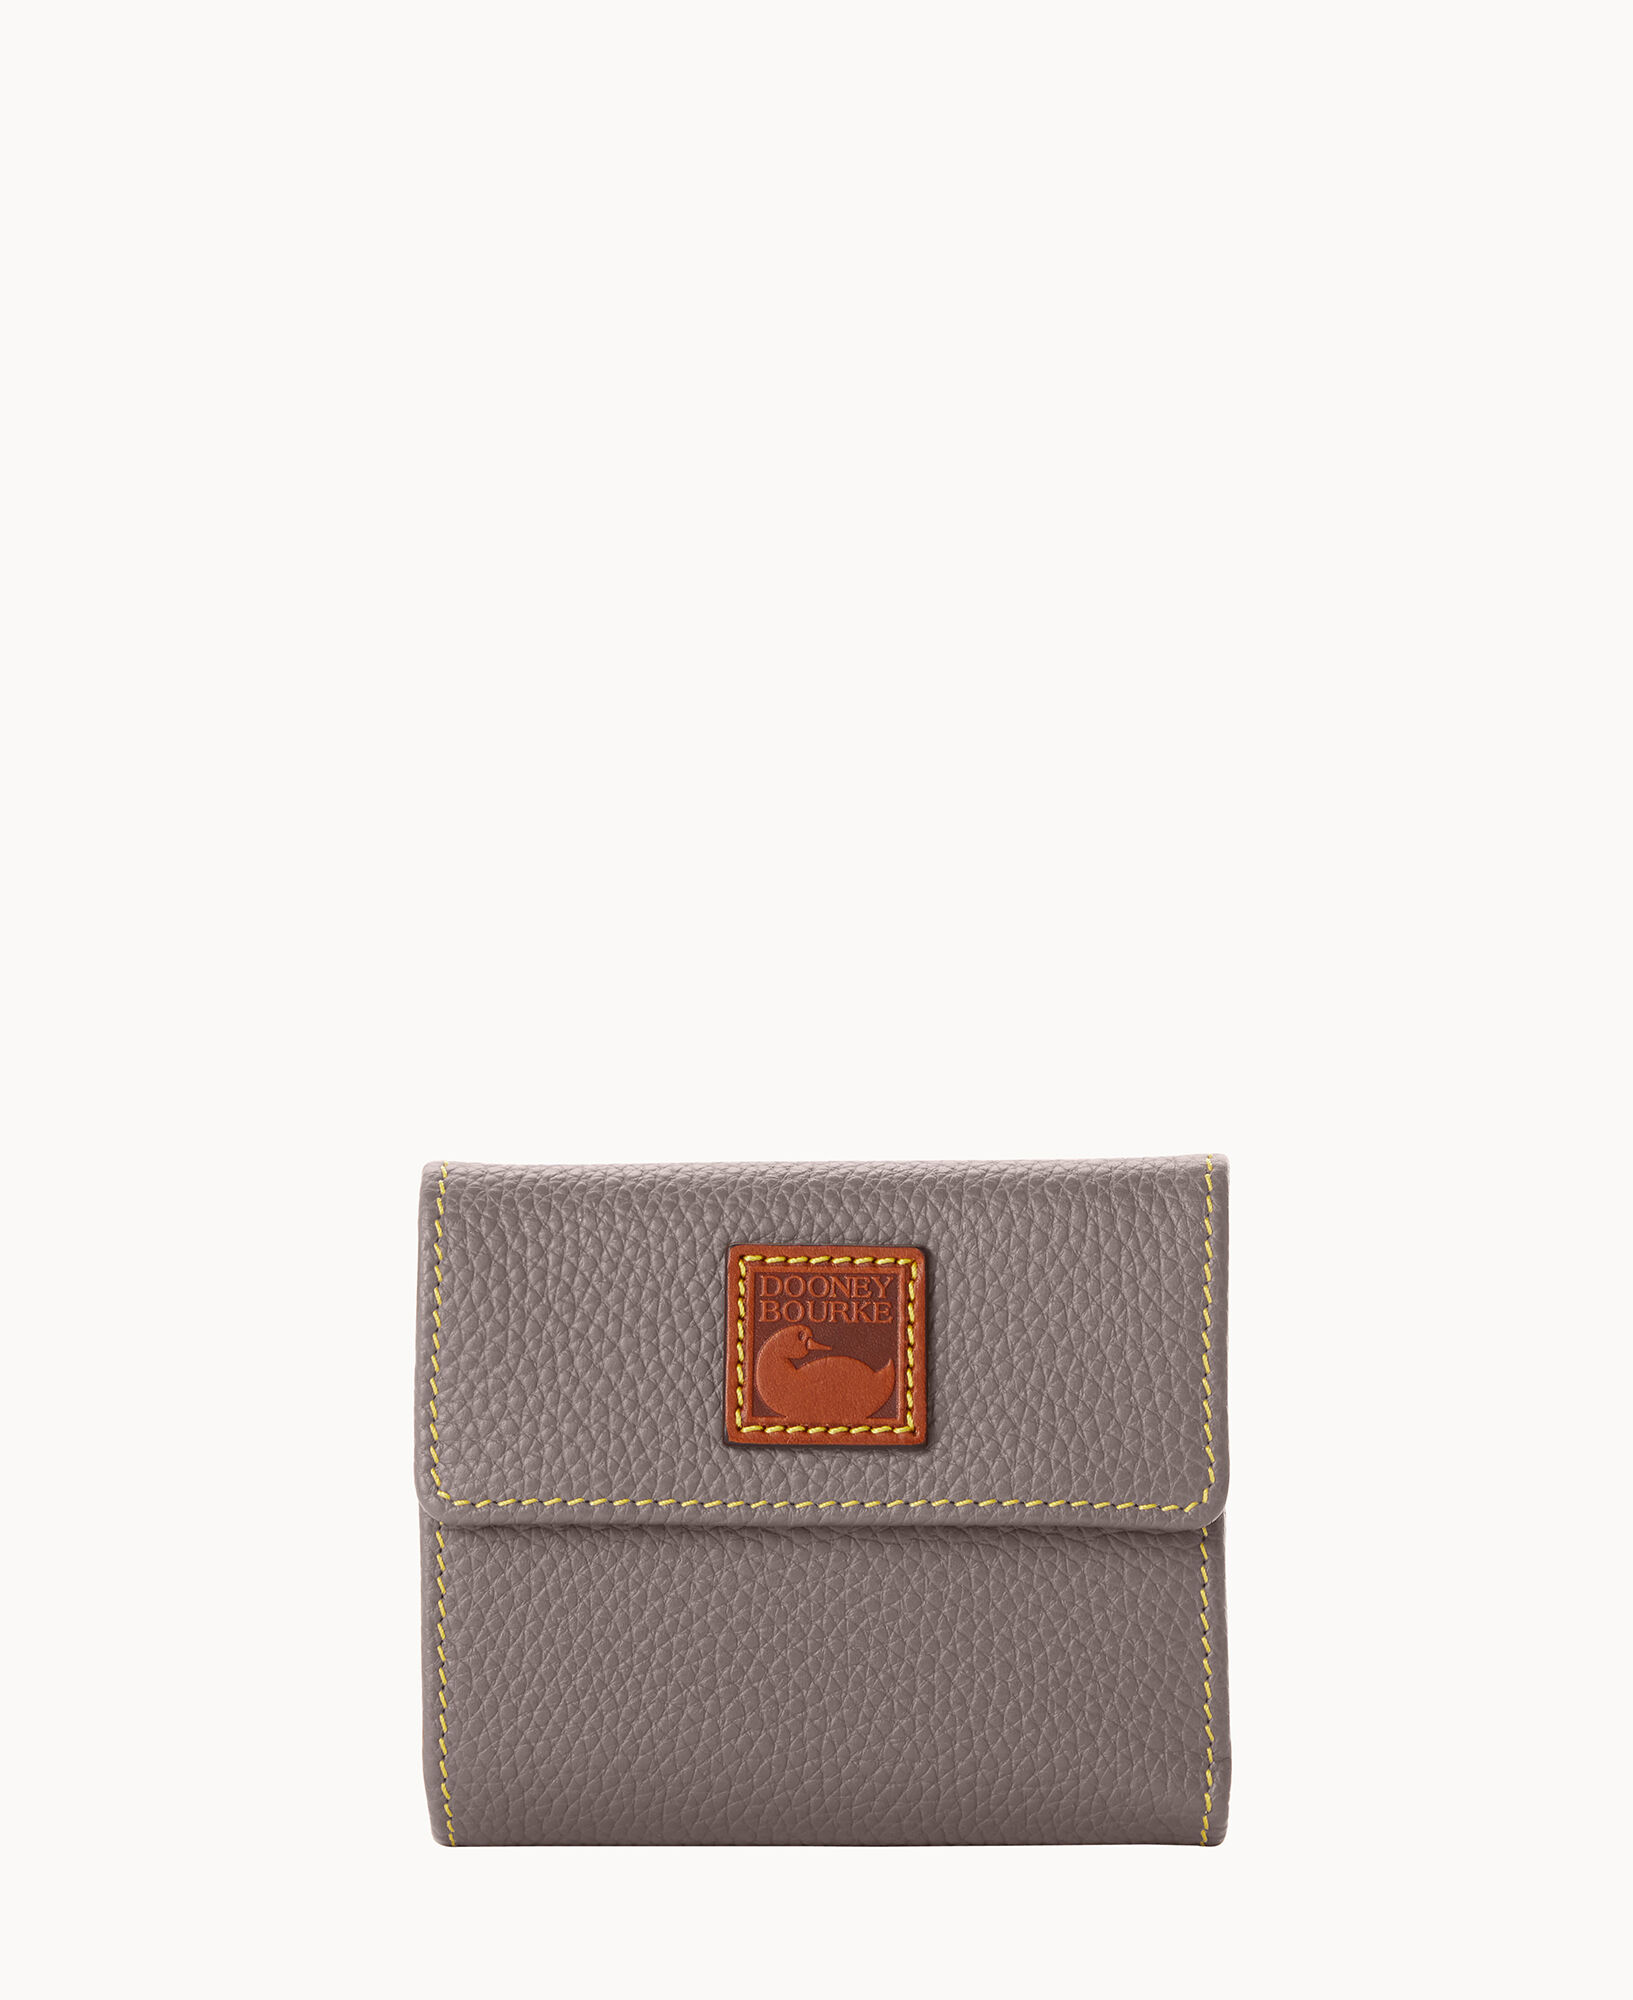 Dooney & Bourke Ostrich Small Flap Credit Card Wallet